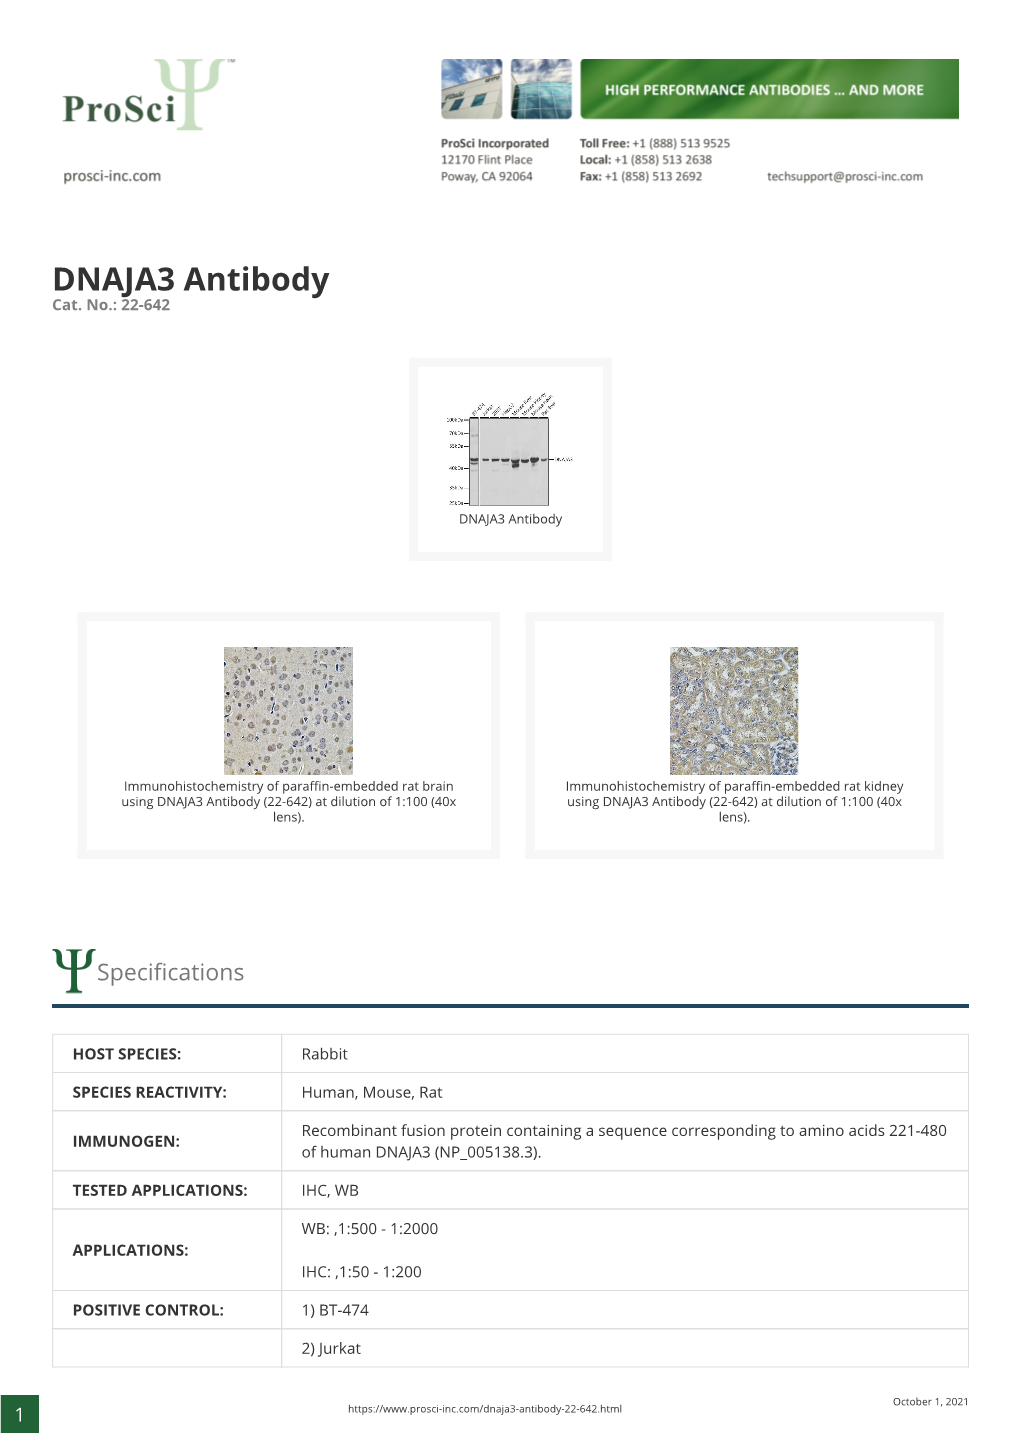 DNAJA3 Antibody Cat